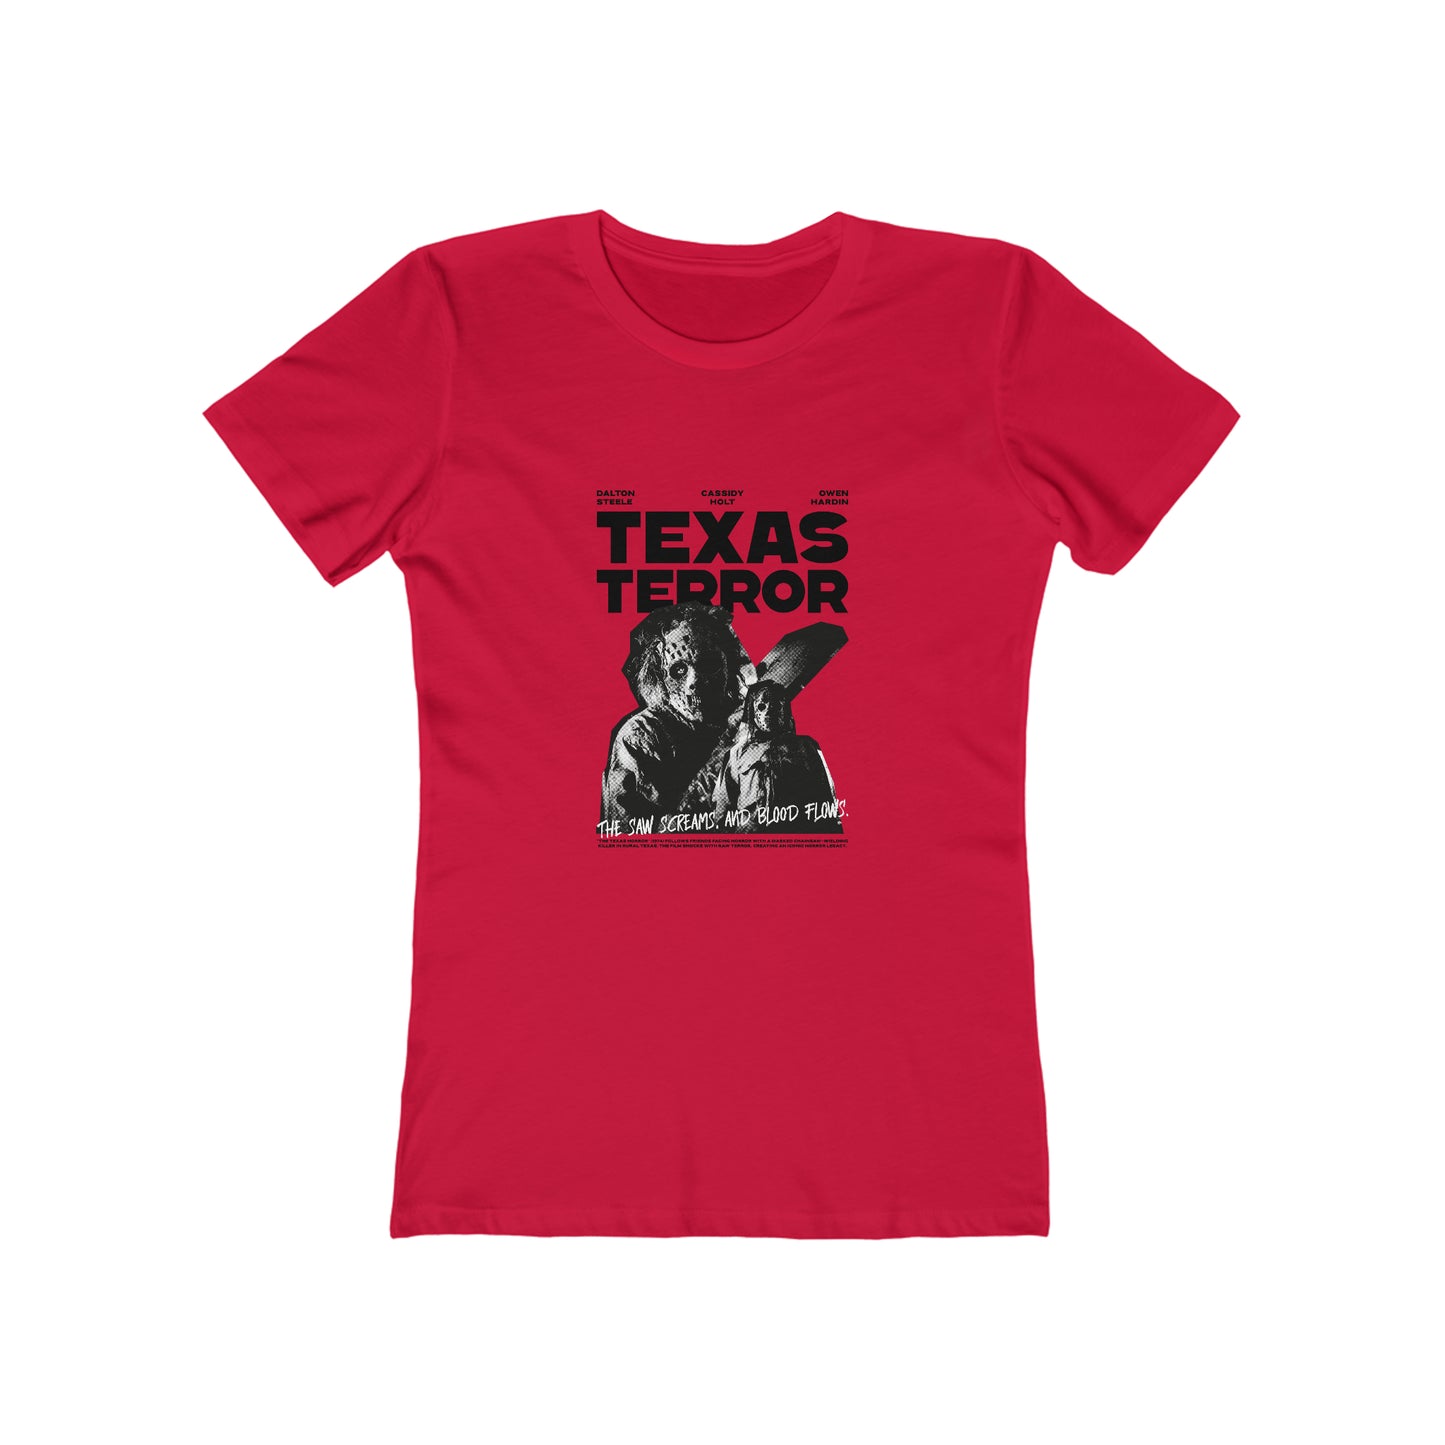 Texas Terror - Women's T-shirt